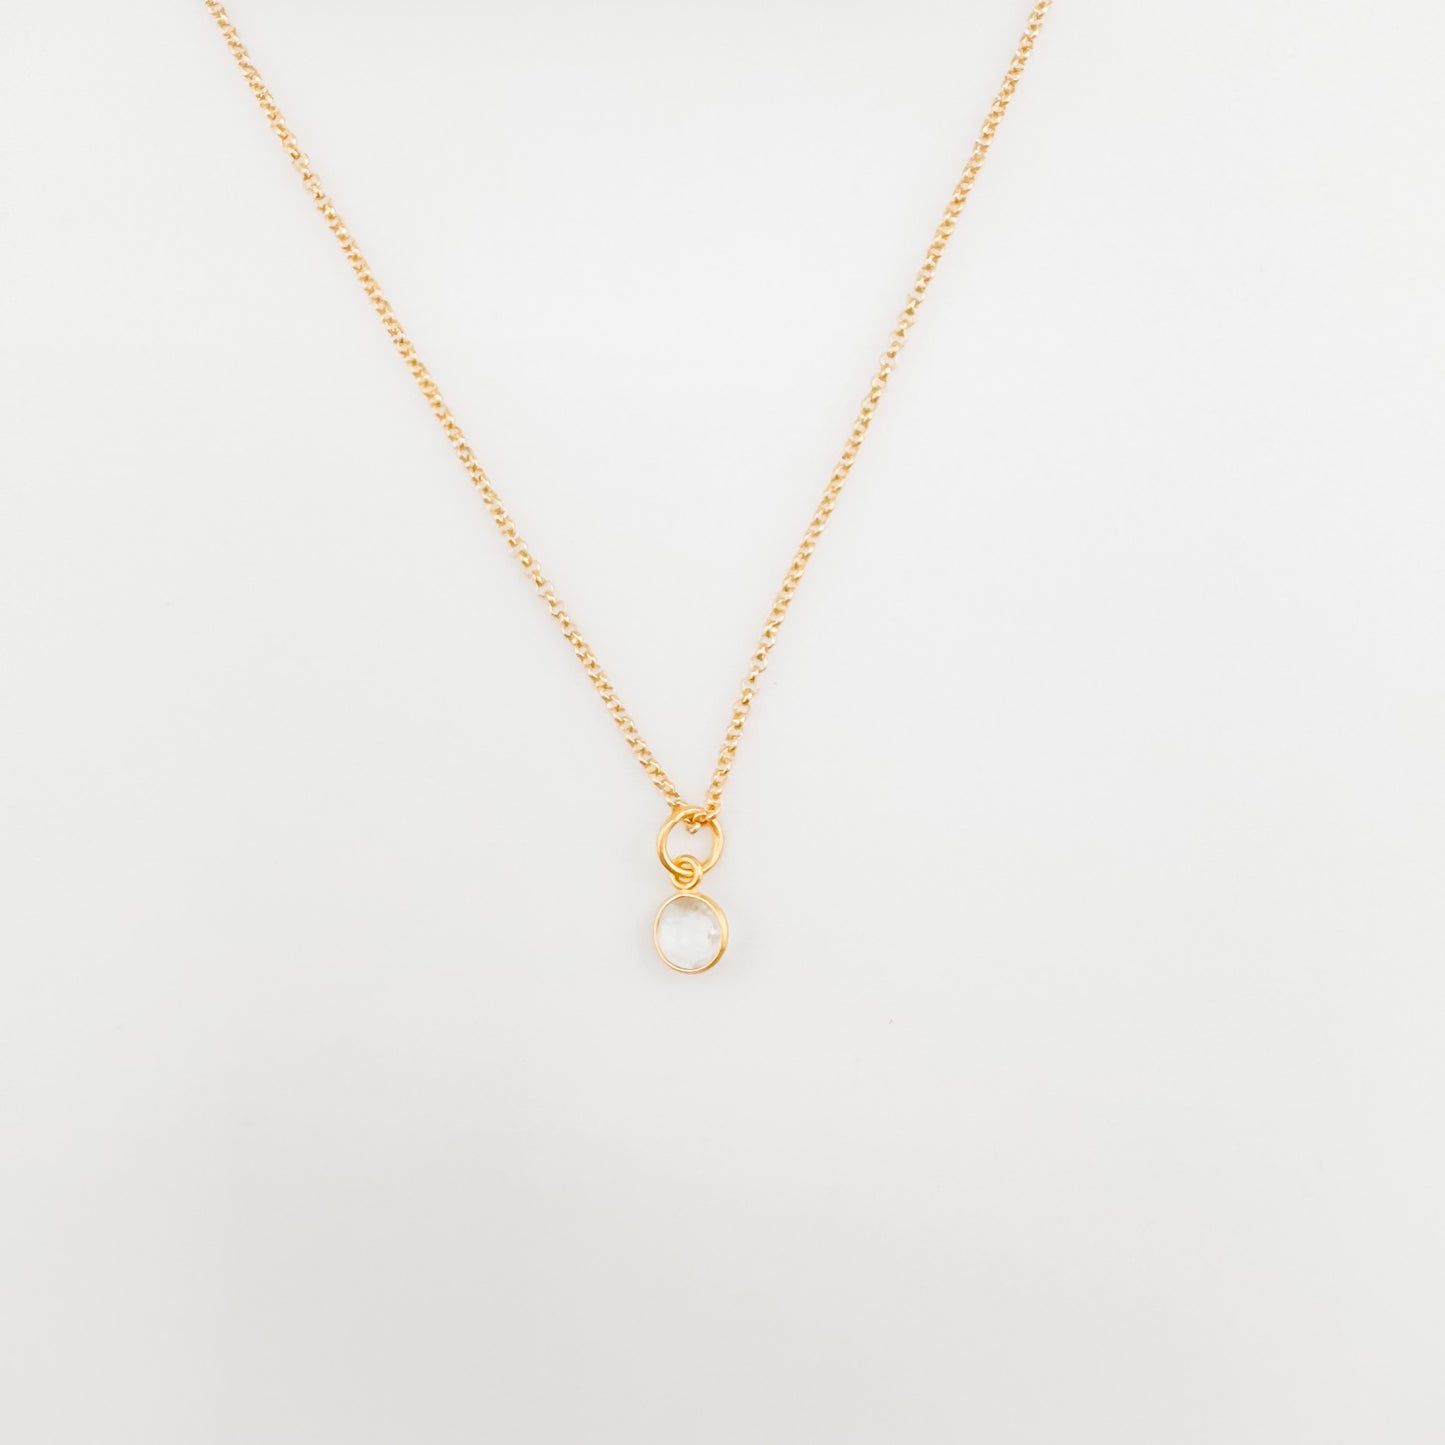 Crystal Quartz Gemstone Necklace